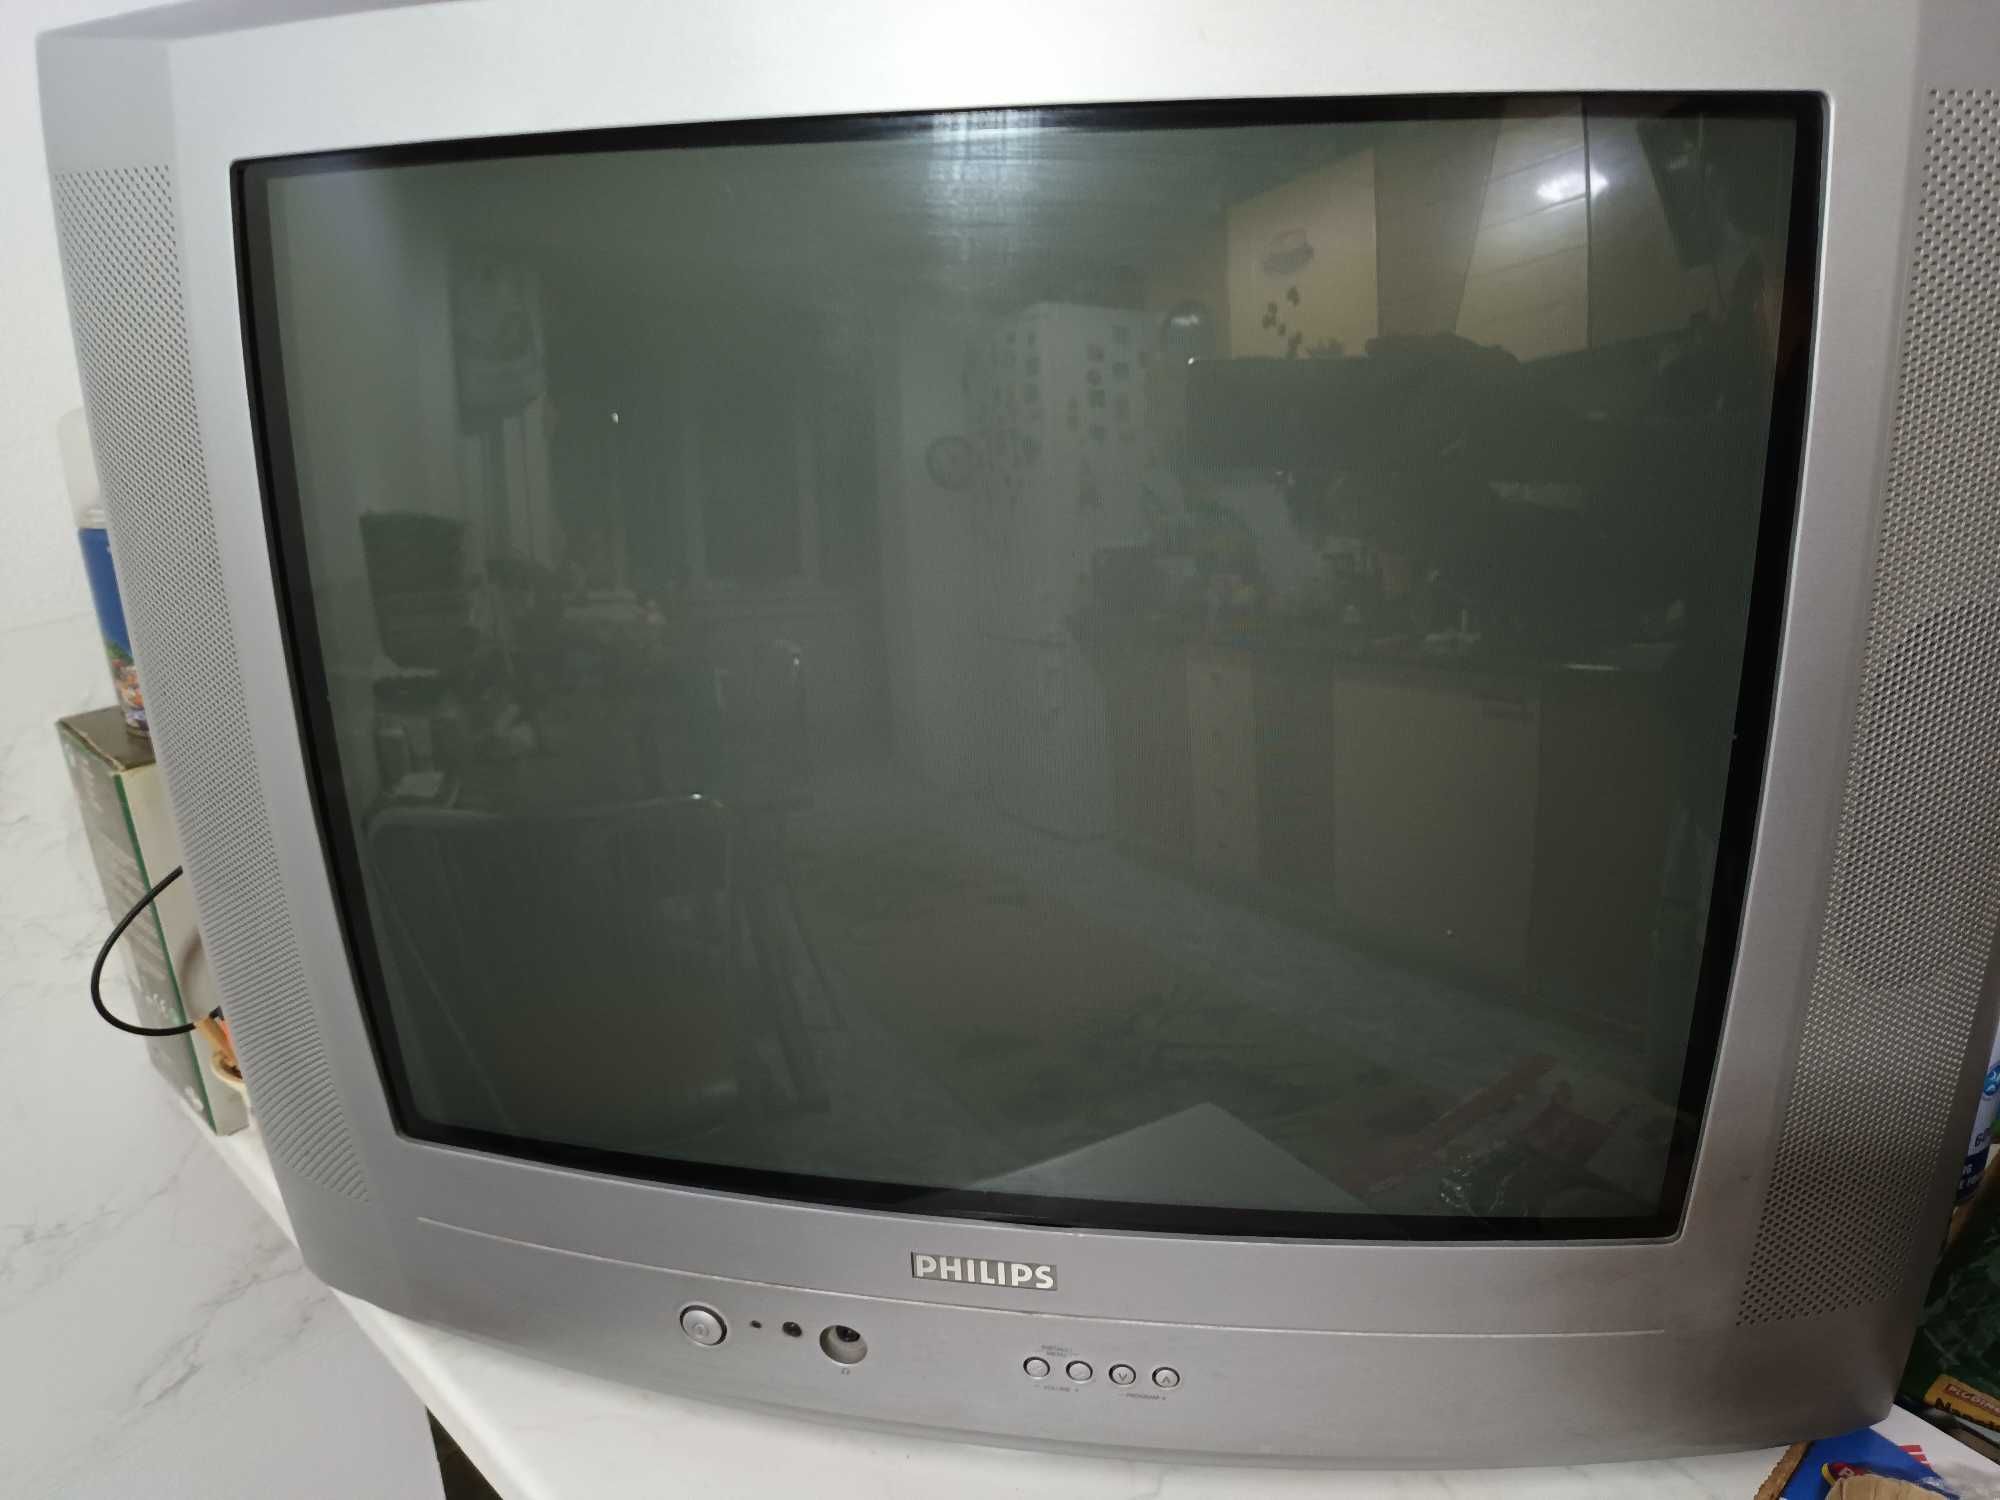 Vand televizor Philips cu tub, diagonala 52 cm